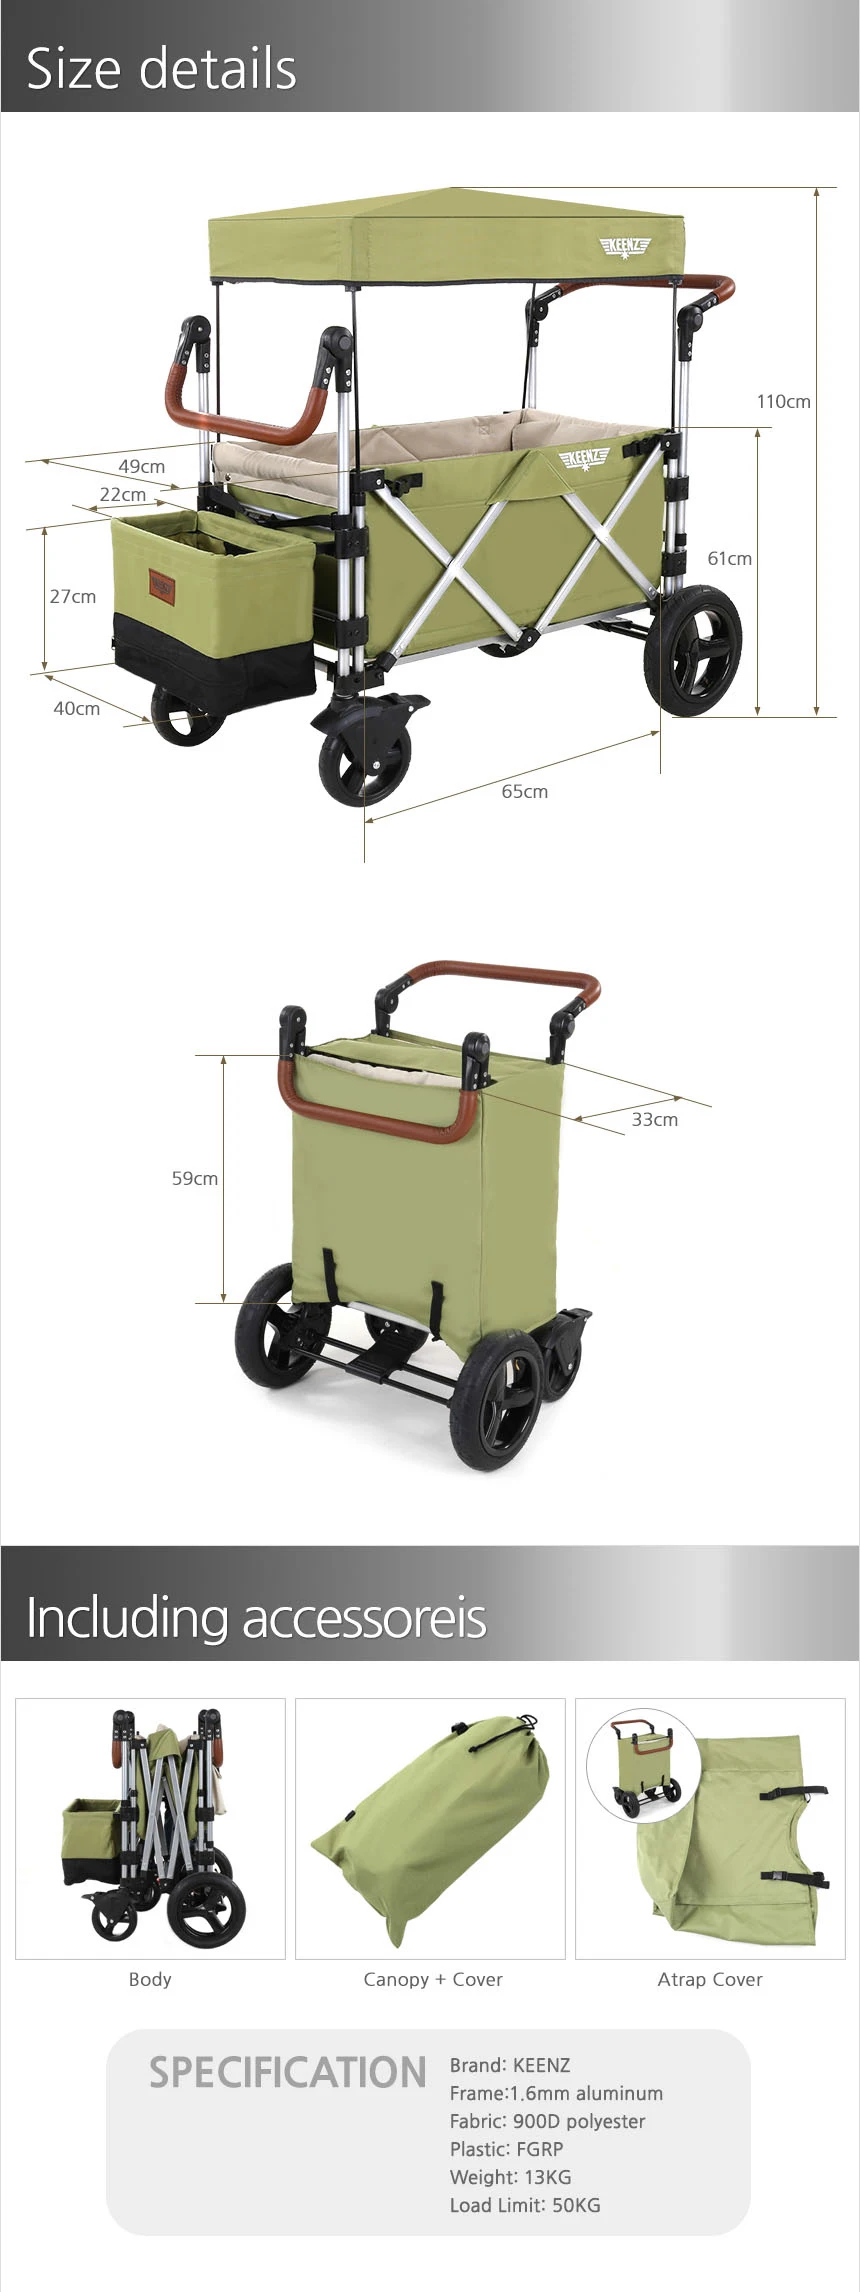 keenz wagon dimensions